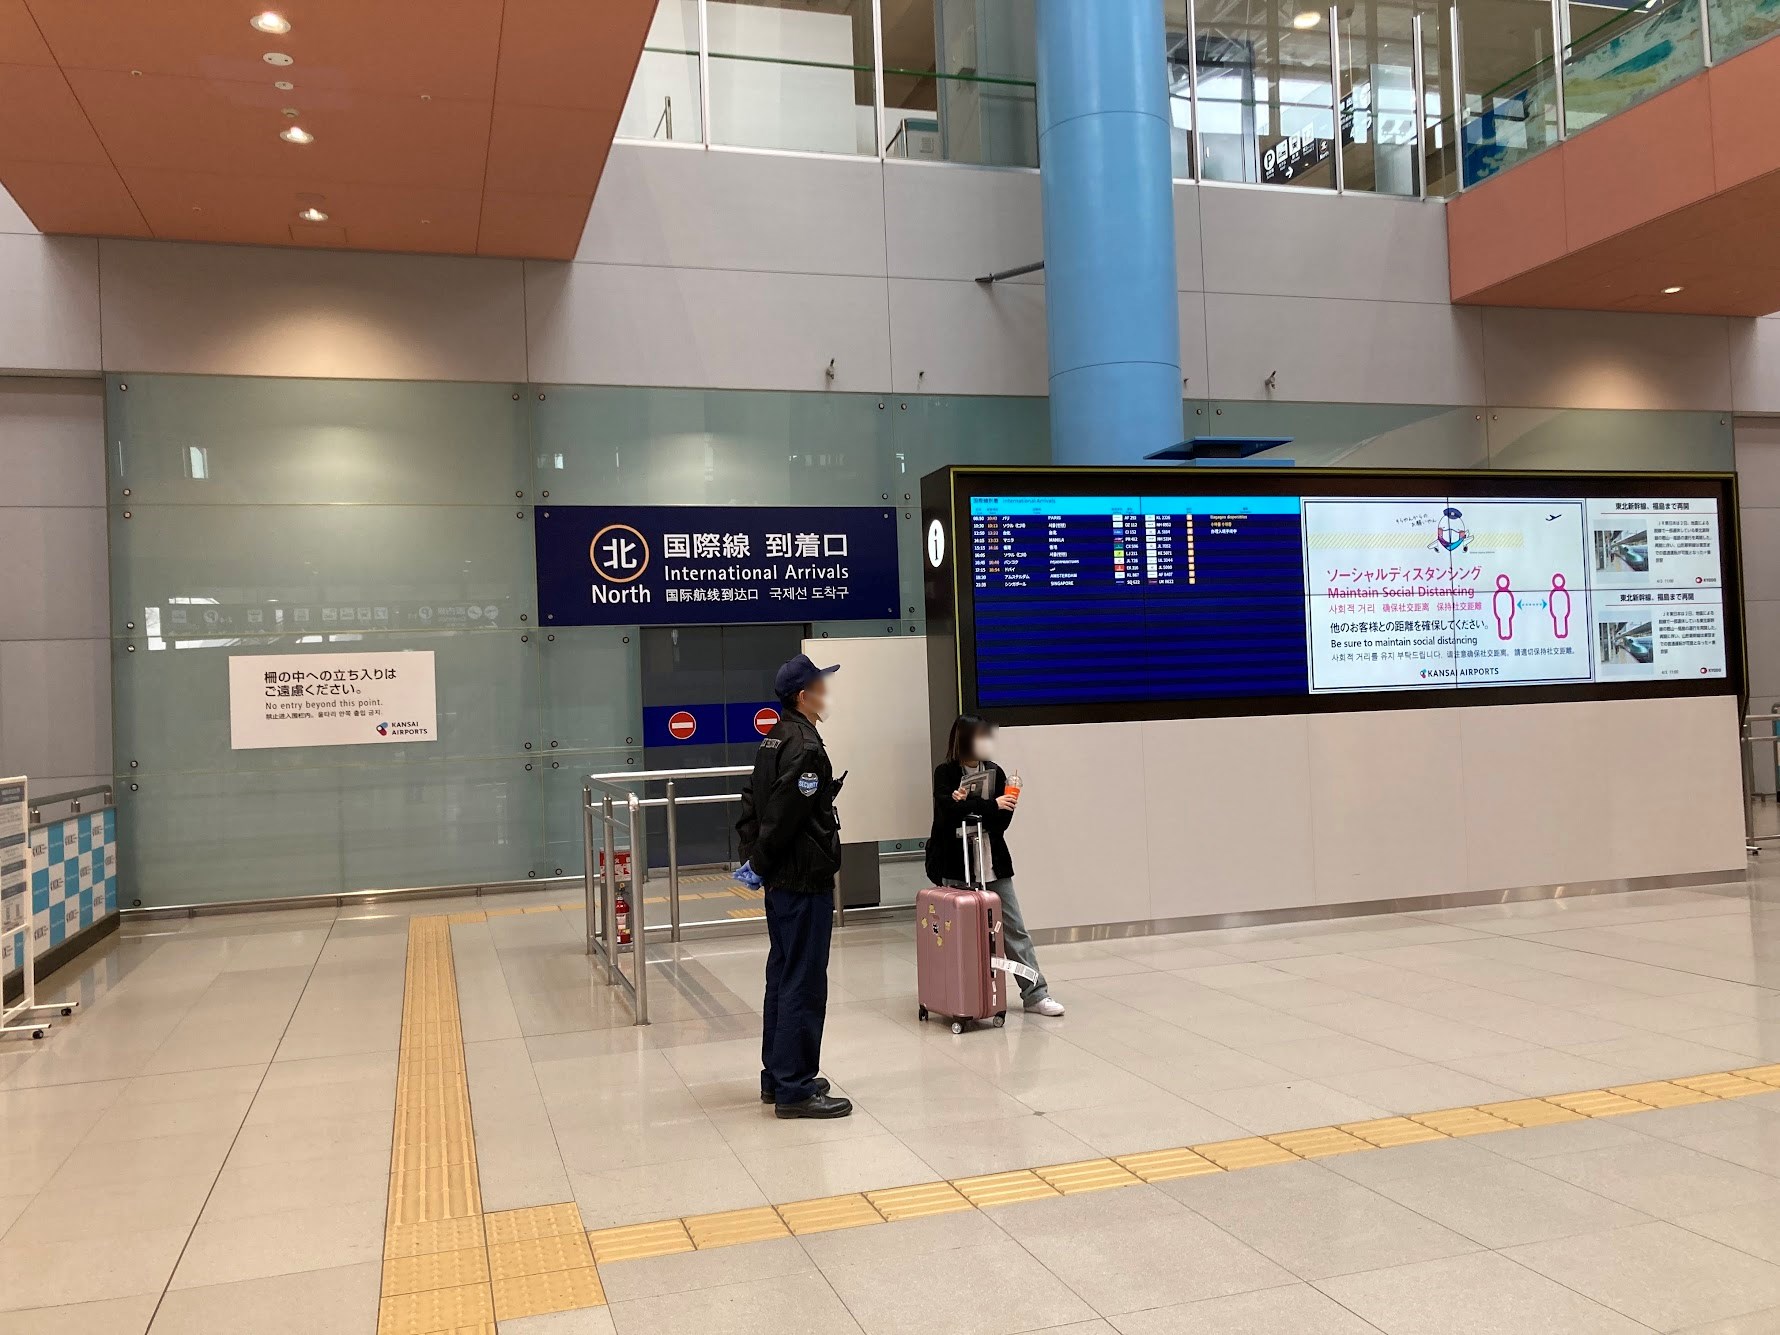 International flight arrival floor at Kansai airport